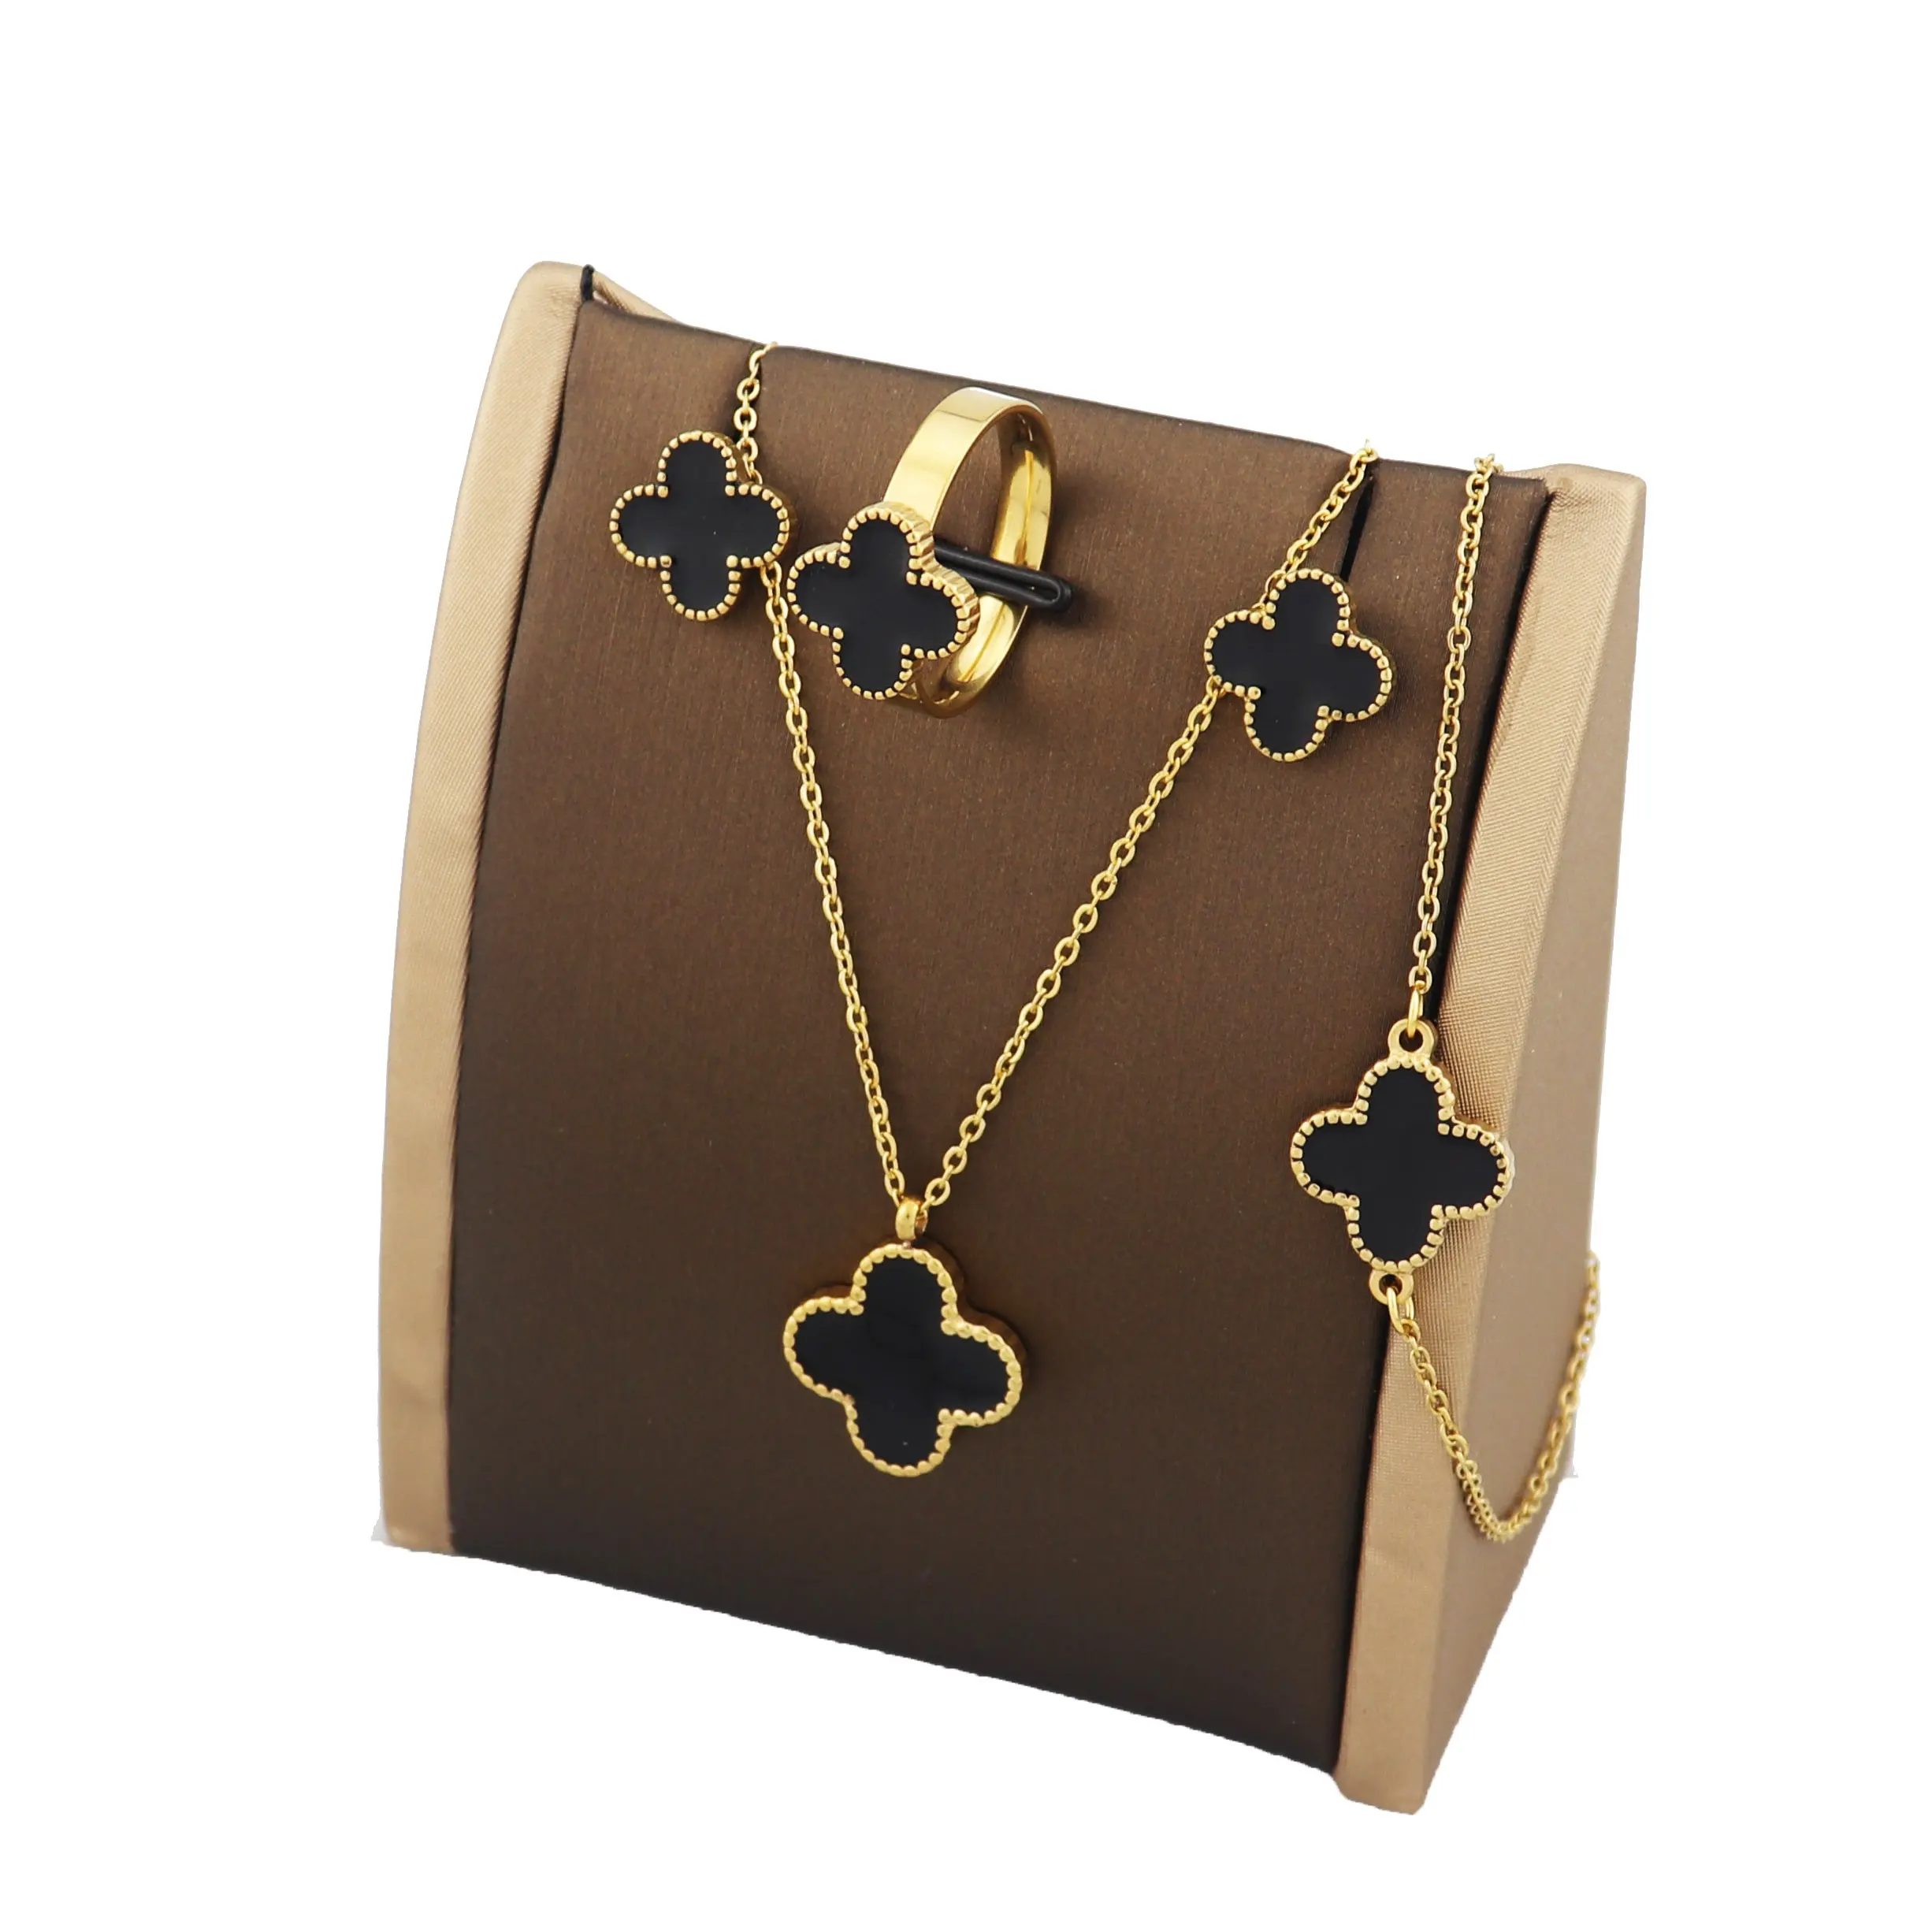 Black Clover stainless steel jewelry women Necklace bracelet ring earrings sets gold plate jewelry set